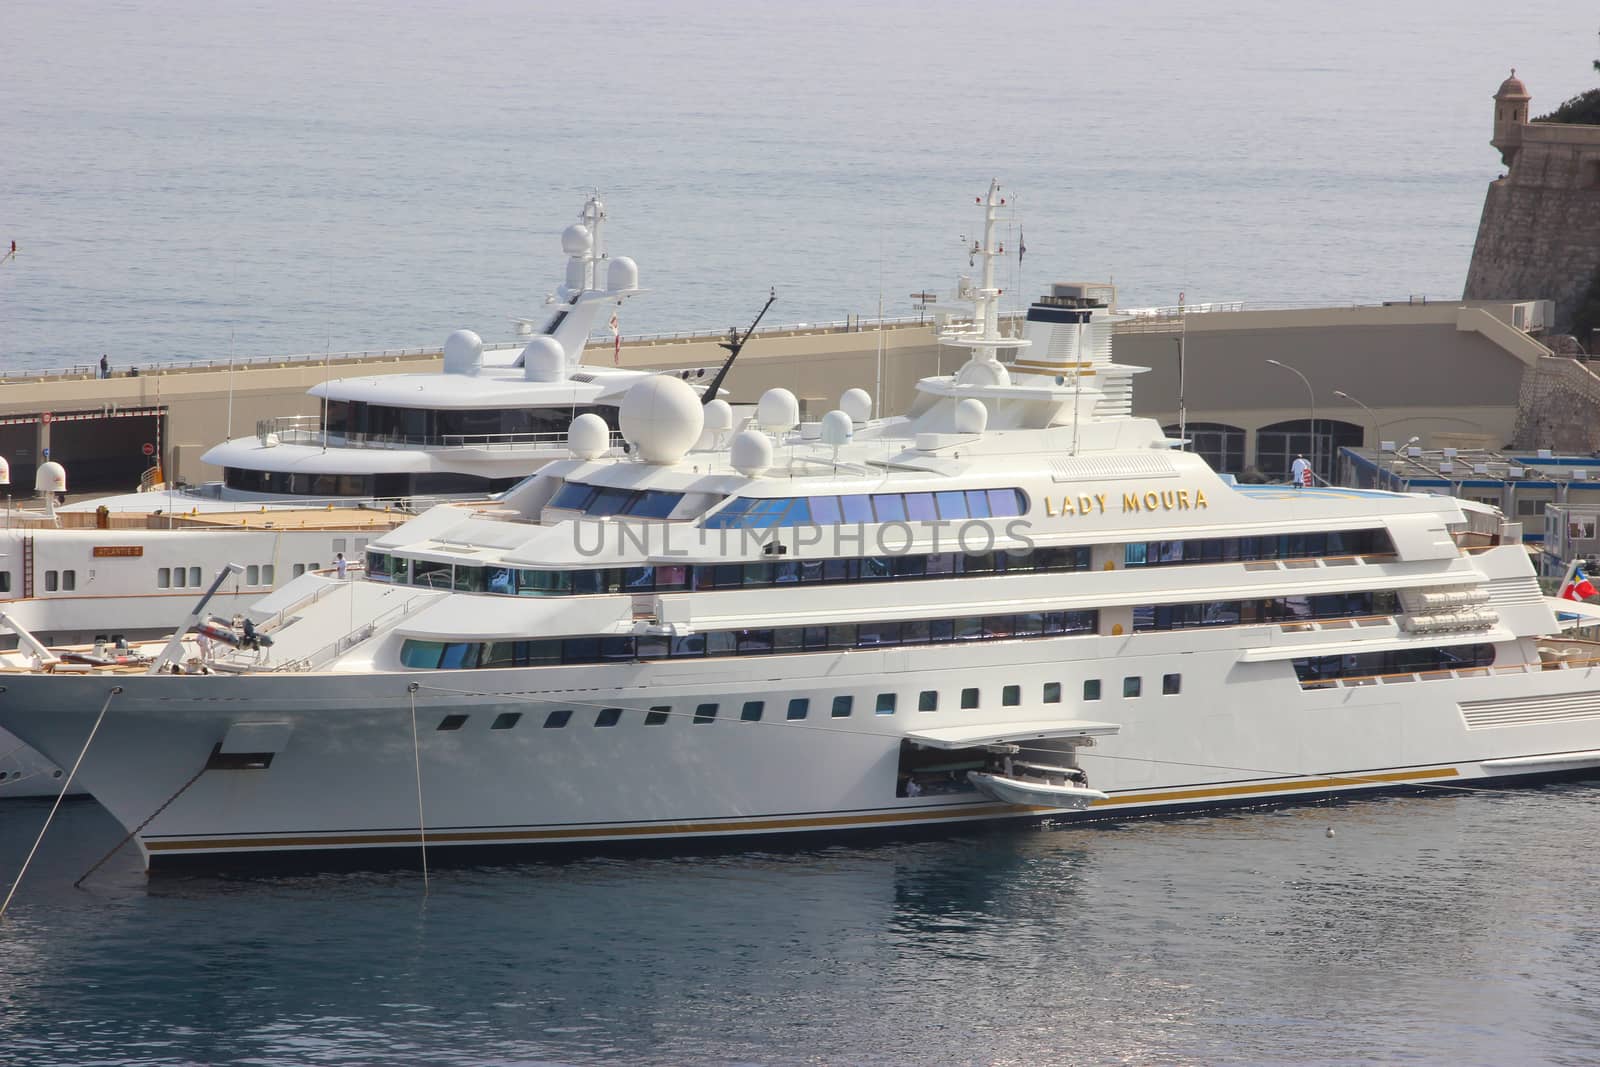 Monte-Carlo, Monaco - April 6, 2016: Luxury Yacht in the Port Hercule of Monaco. Lady Moura is a Private Luxury Yacht. The Owner is a Wealthy Saudi Arabian Businessman, Nasser Al-Rashid